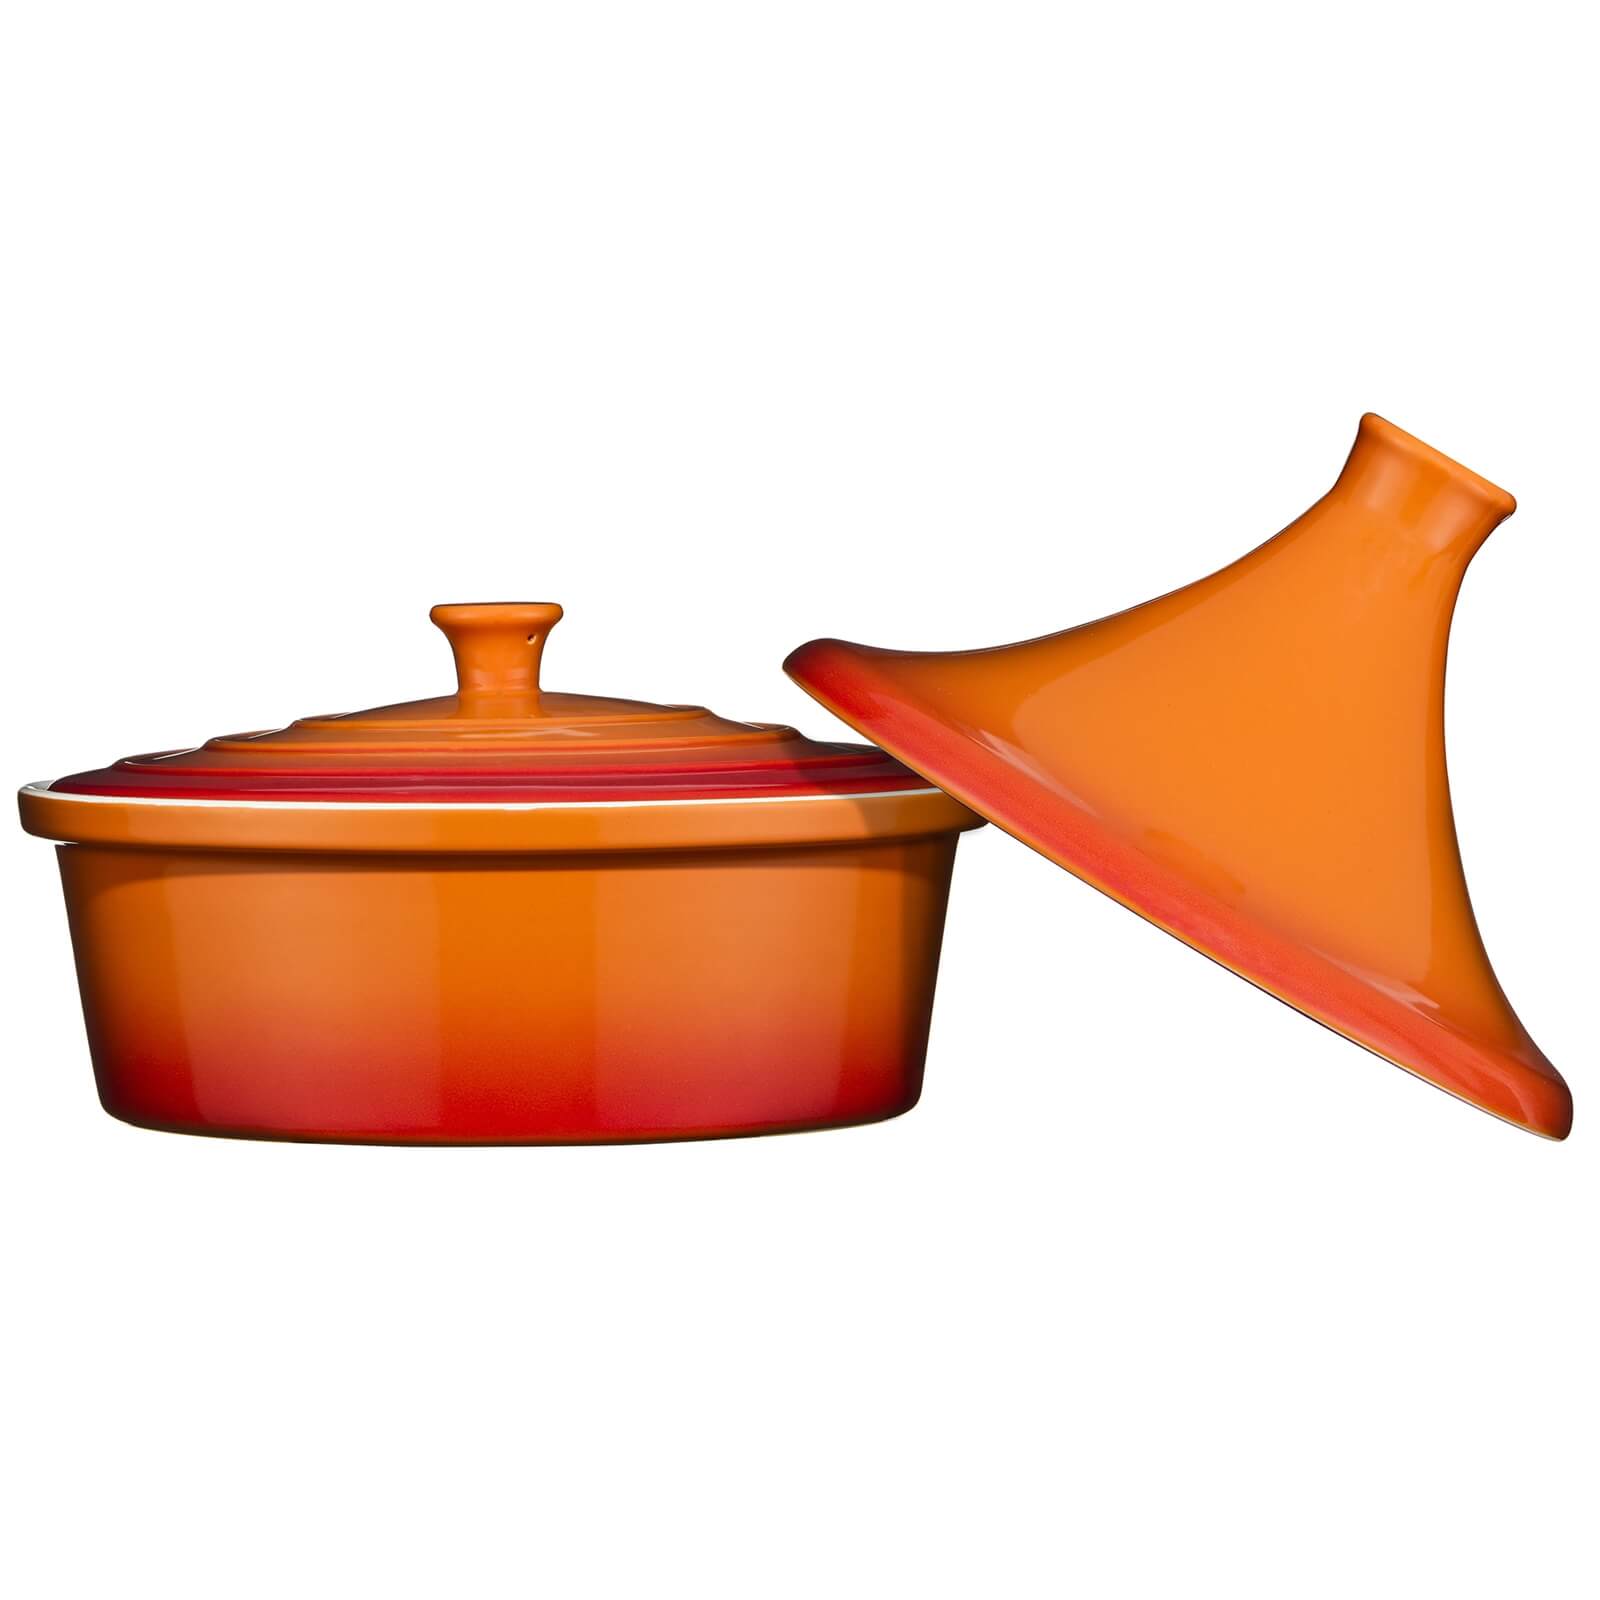 Ovenlove Tagine Casserole Dish - 2.3L - Graduated Orange